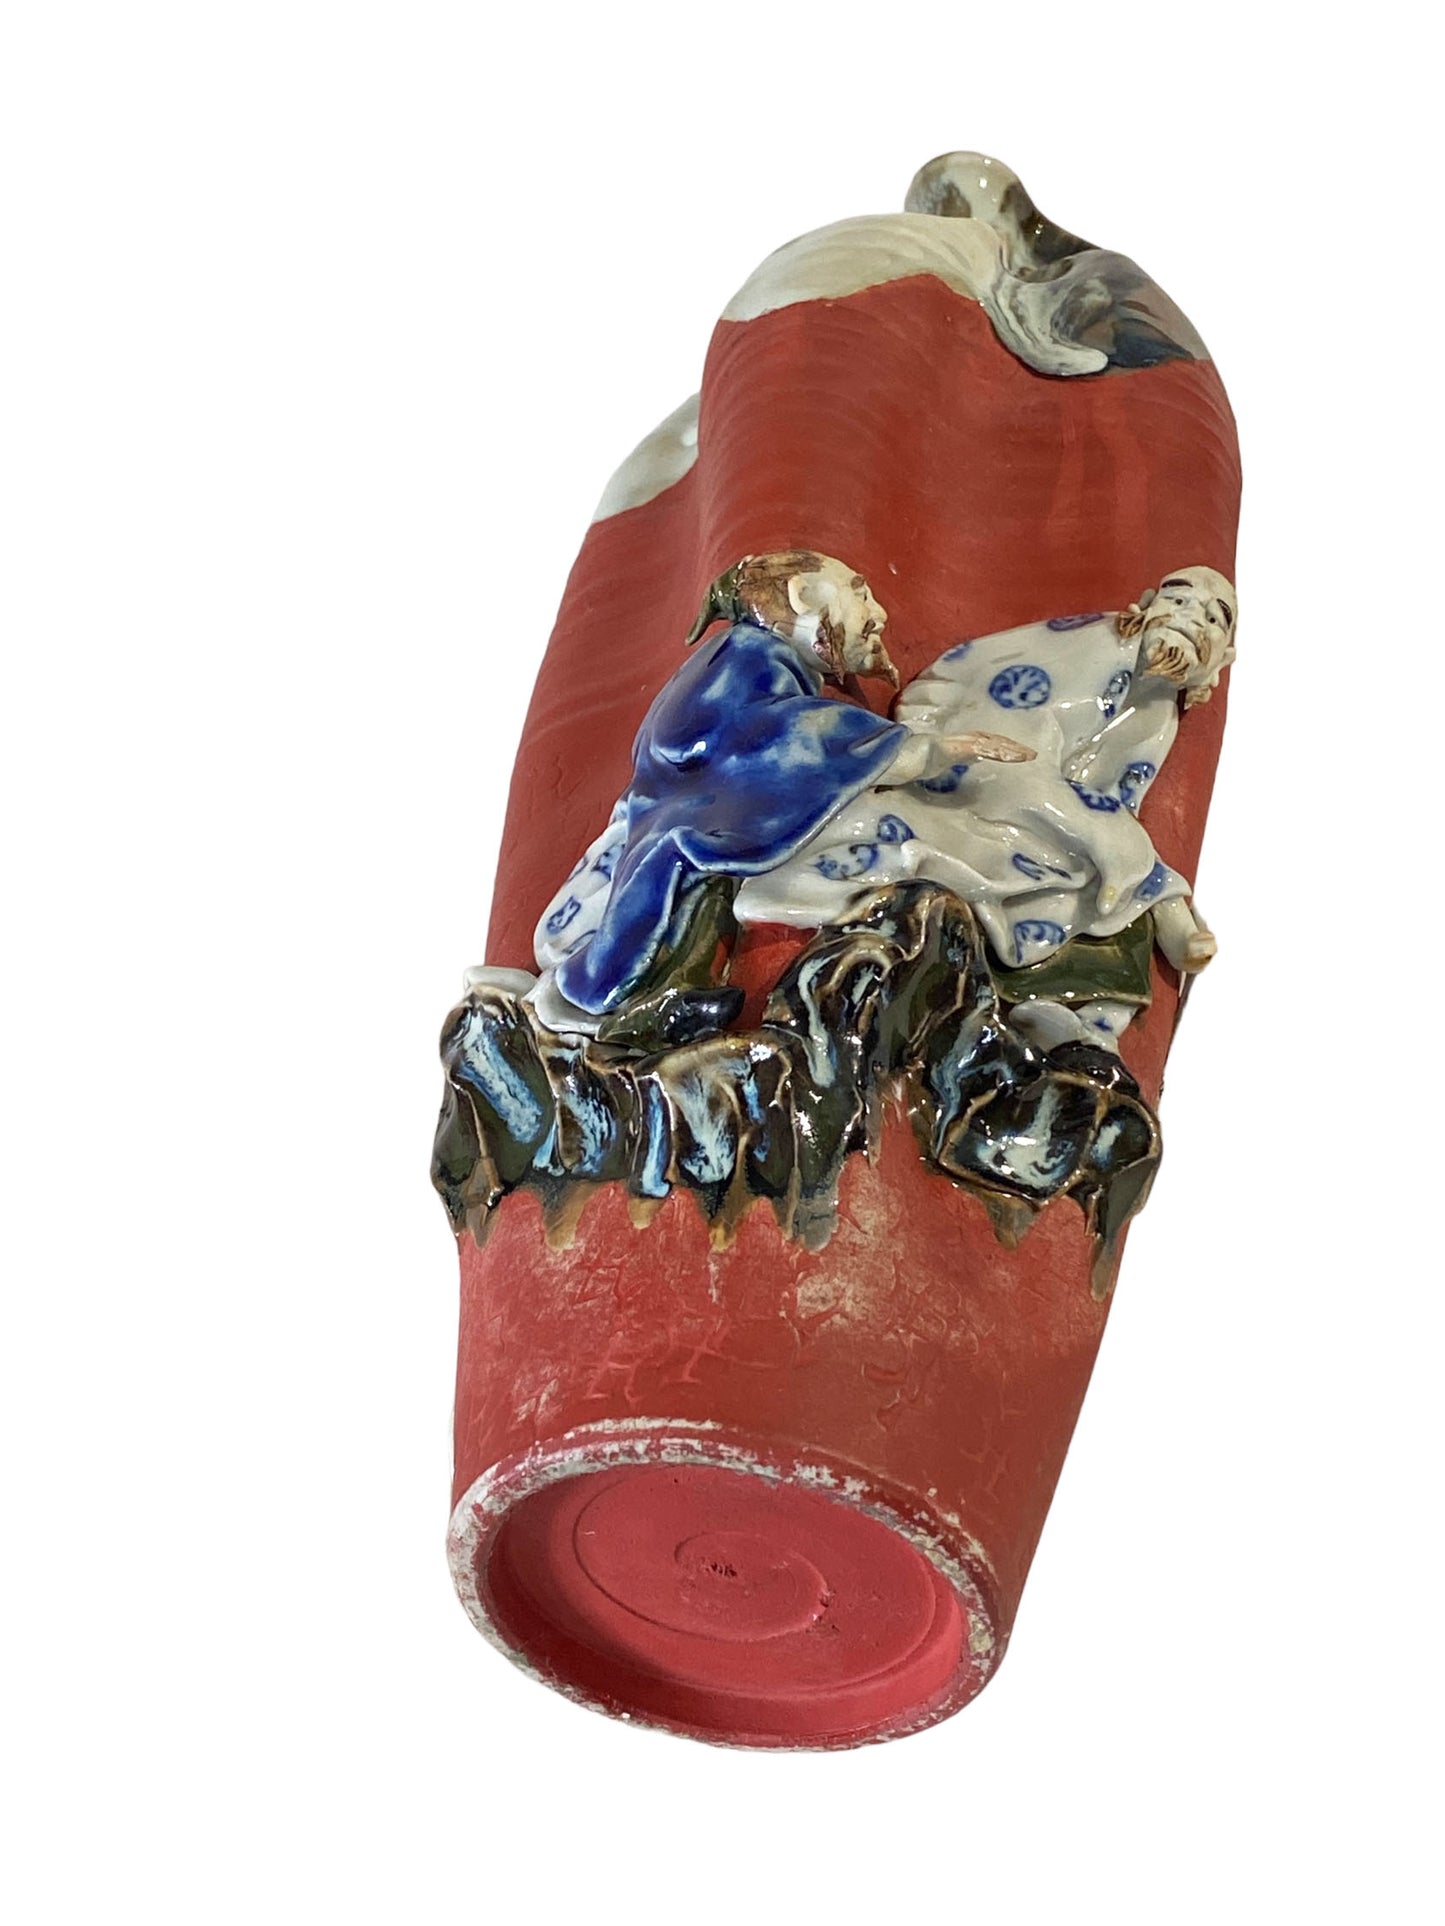 #5701 Chinoiserie Decorative Ceramic Vase w/High Relief Figures 12"h